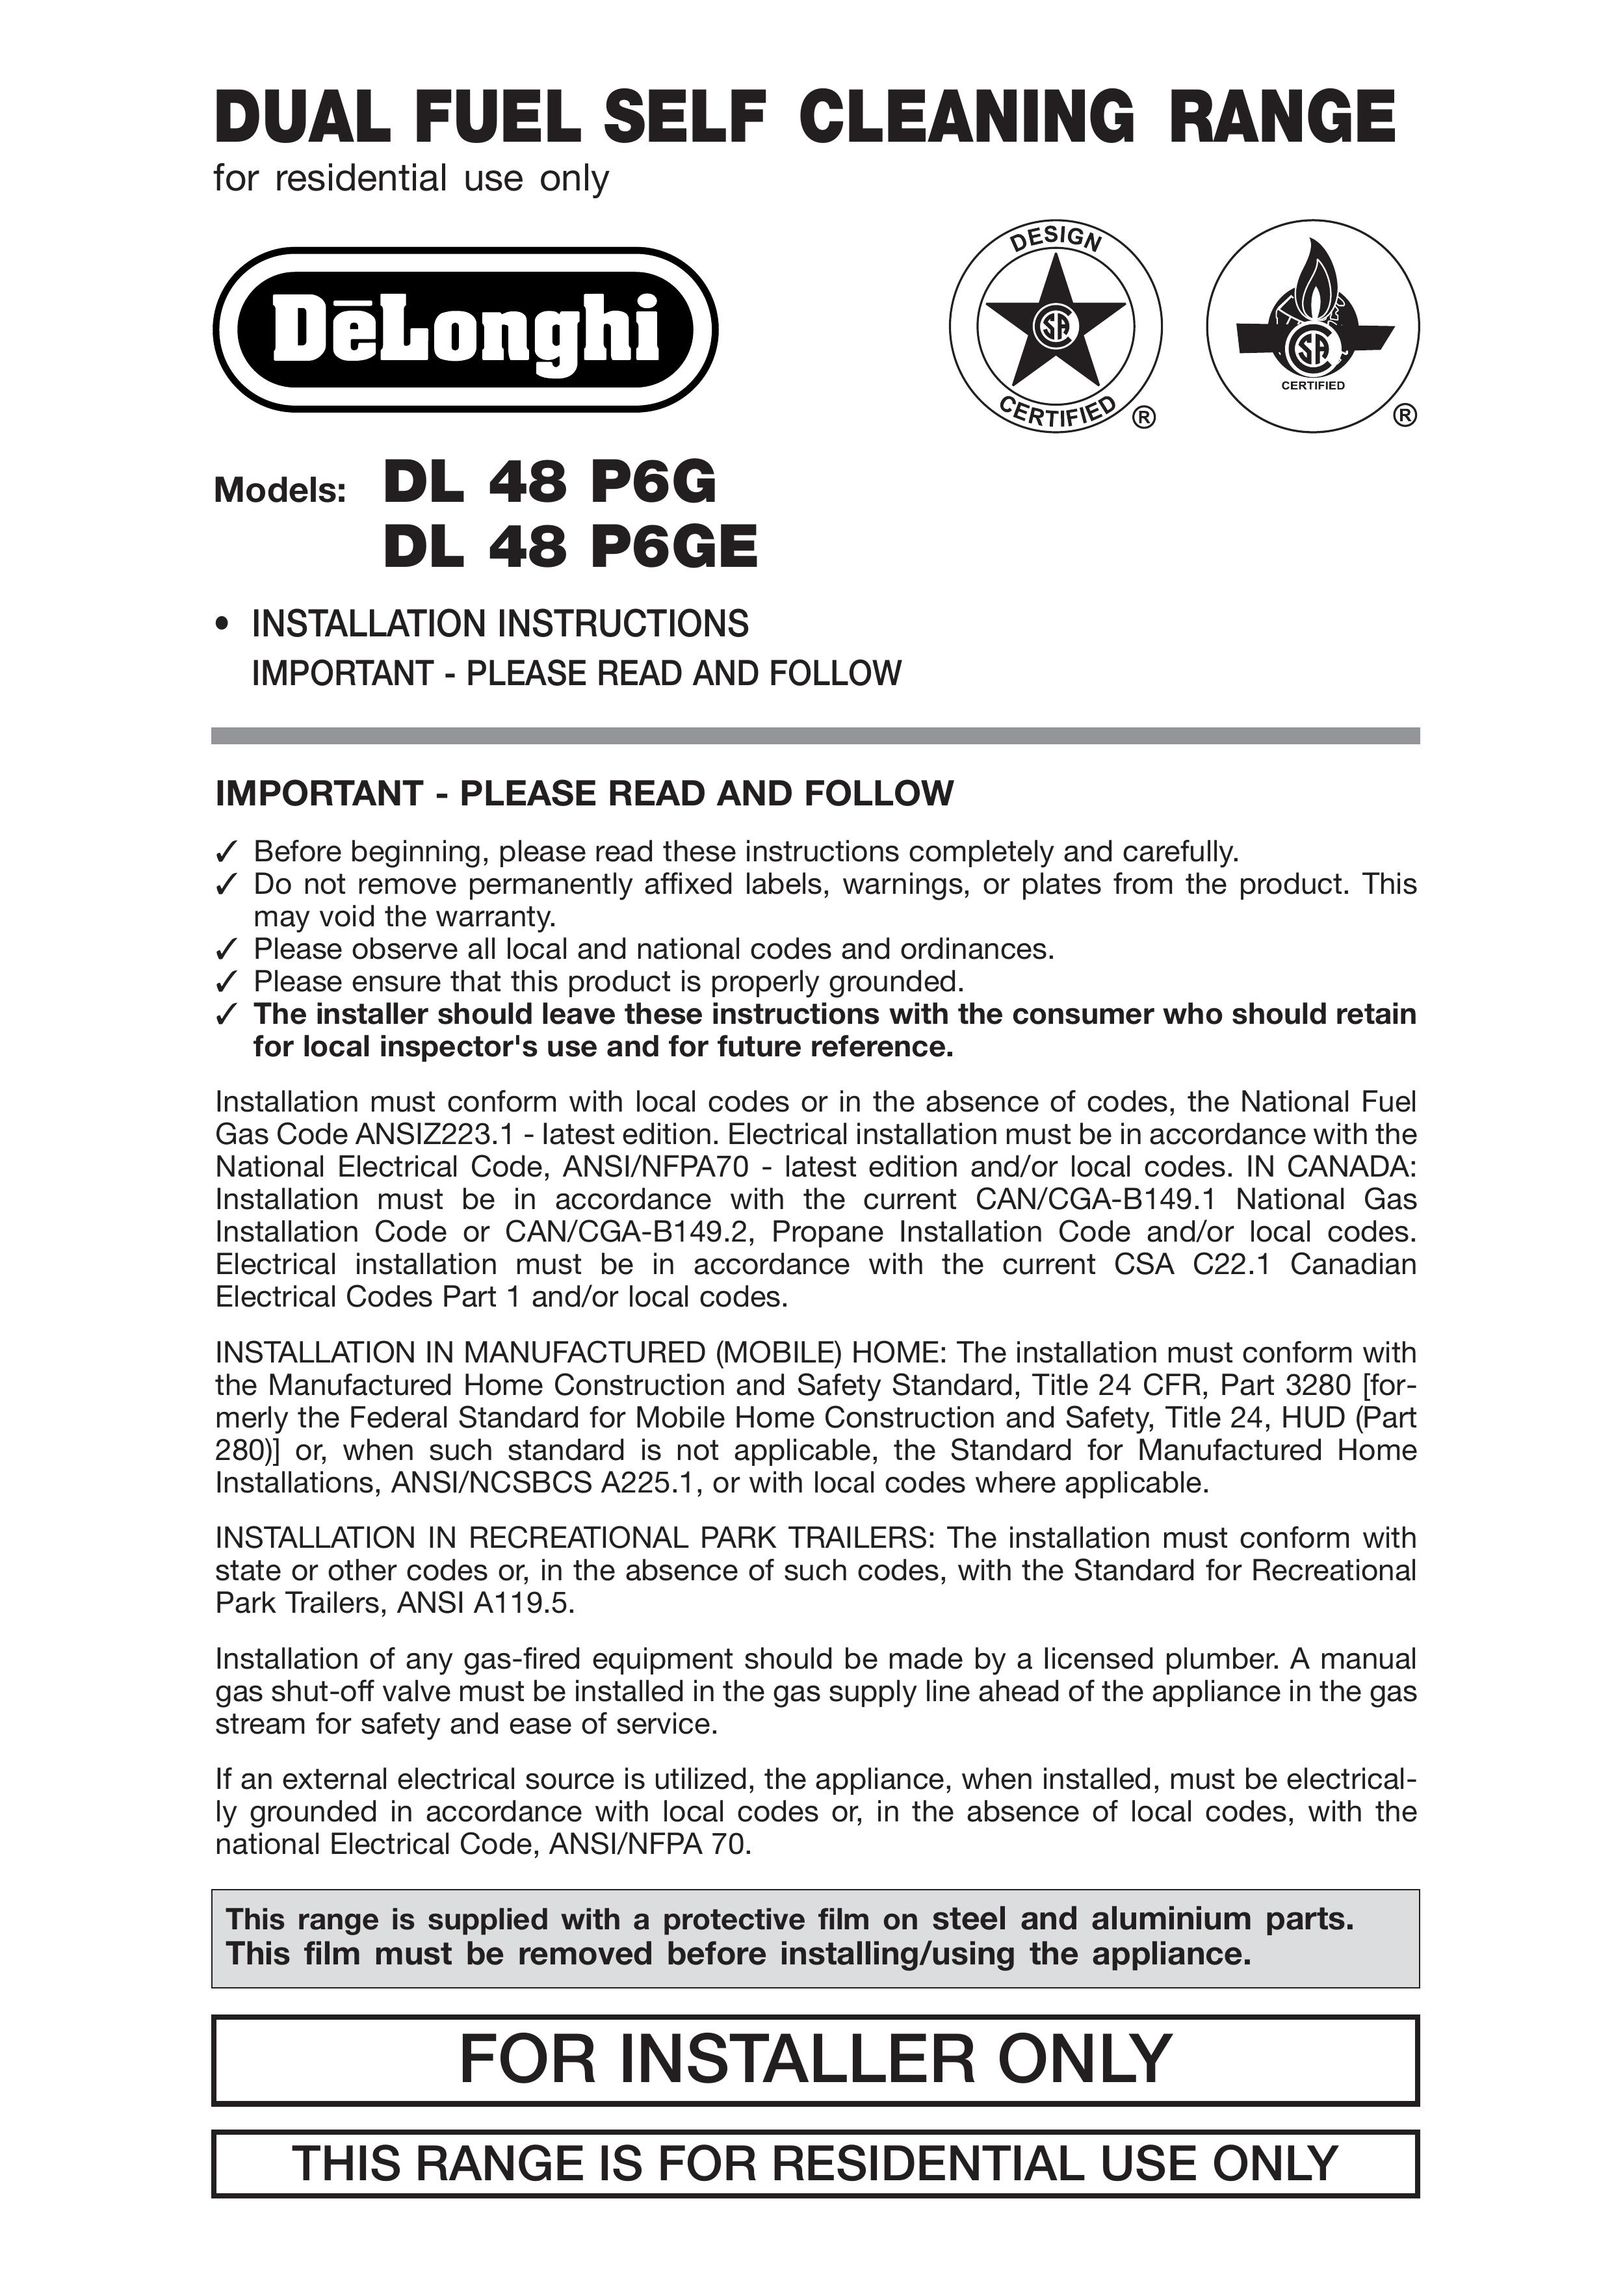 DeLonghi DL 48 P6G Range User Manual